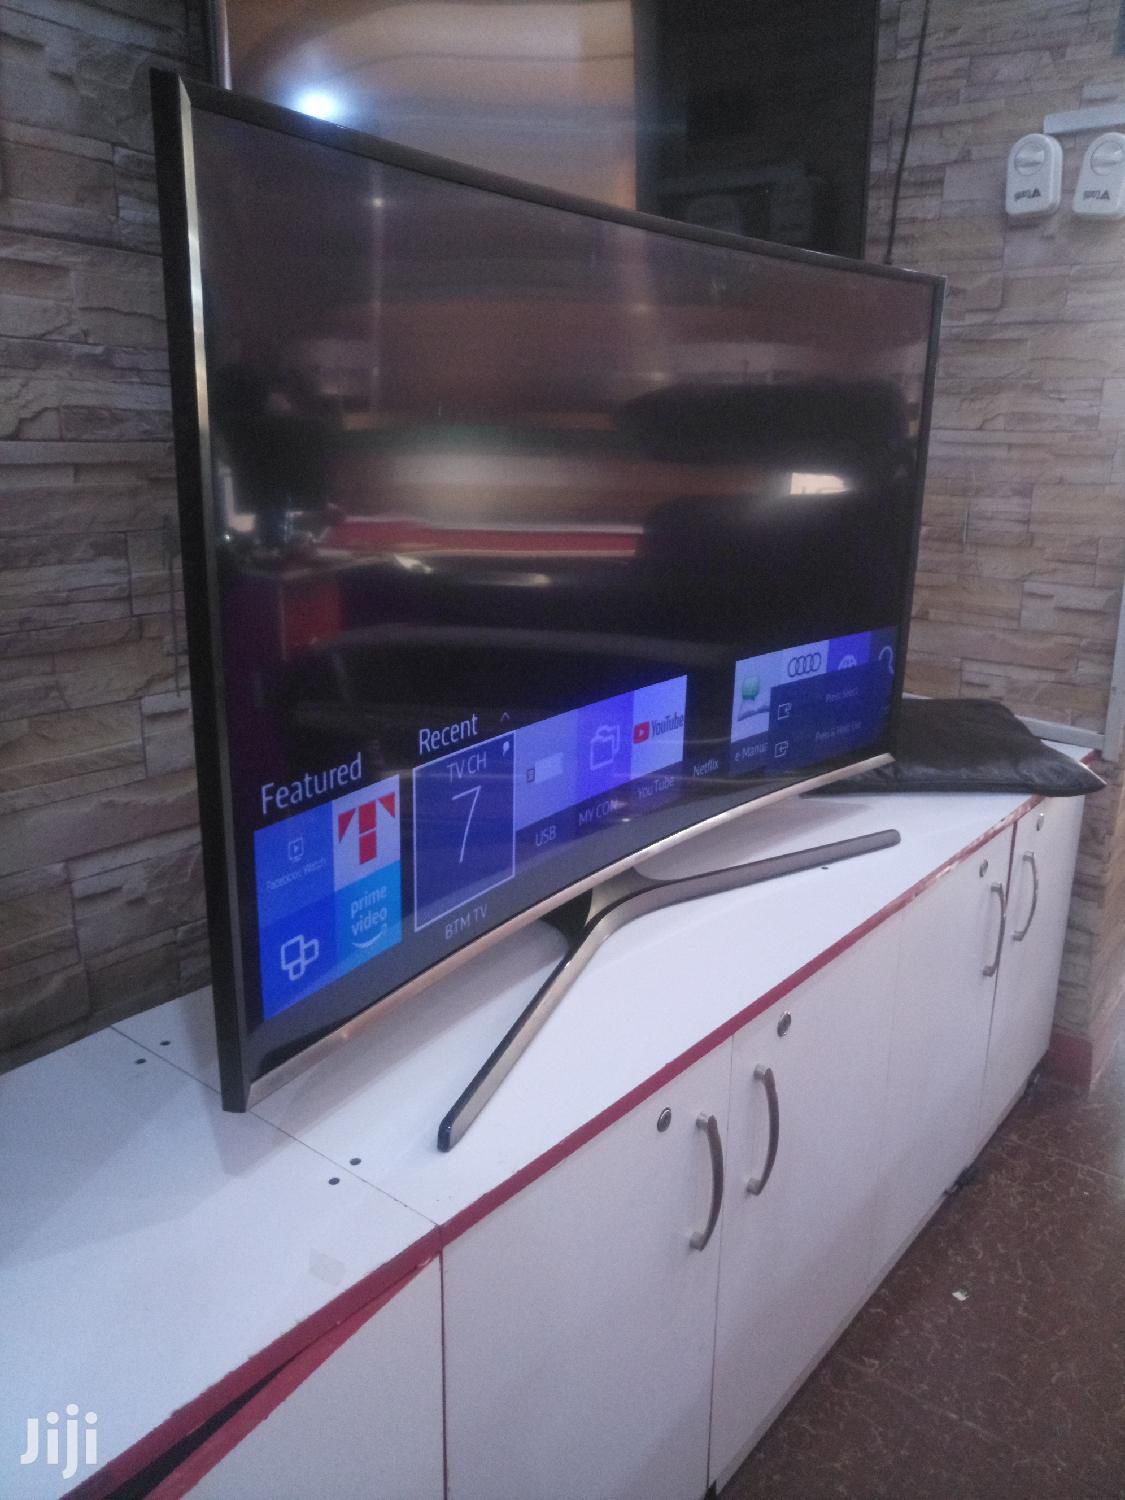 national race skak Curved 4K Samsung 50 Inch Tv for Sale in Newark, NJ - OfferUp